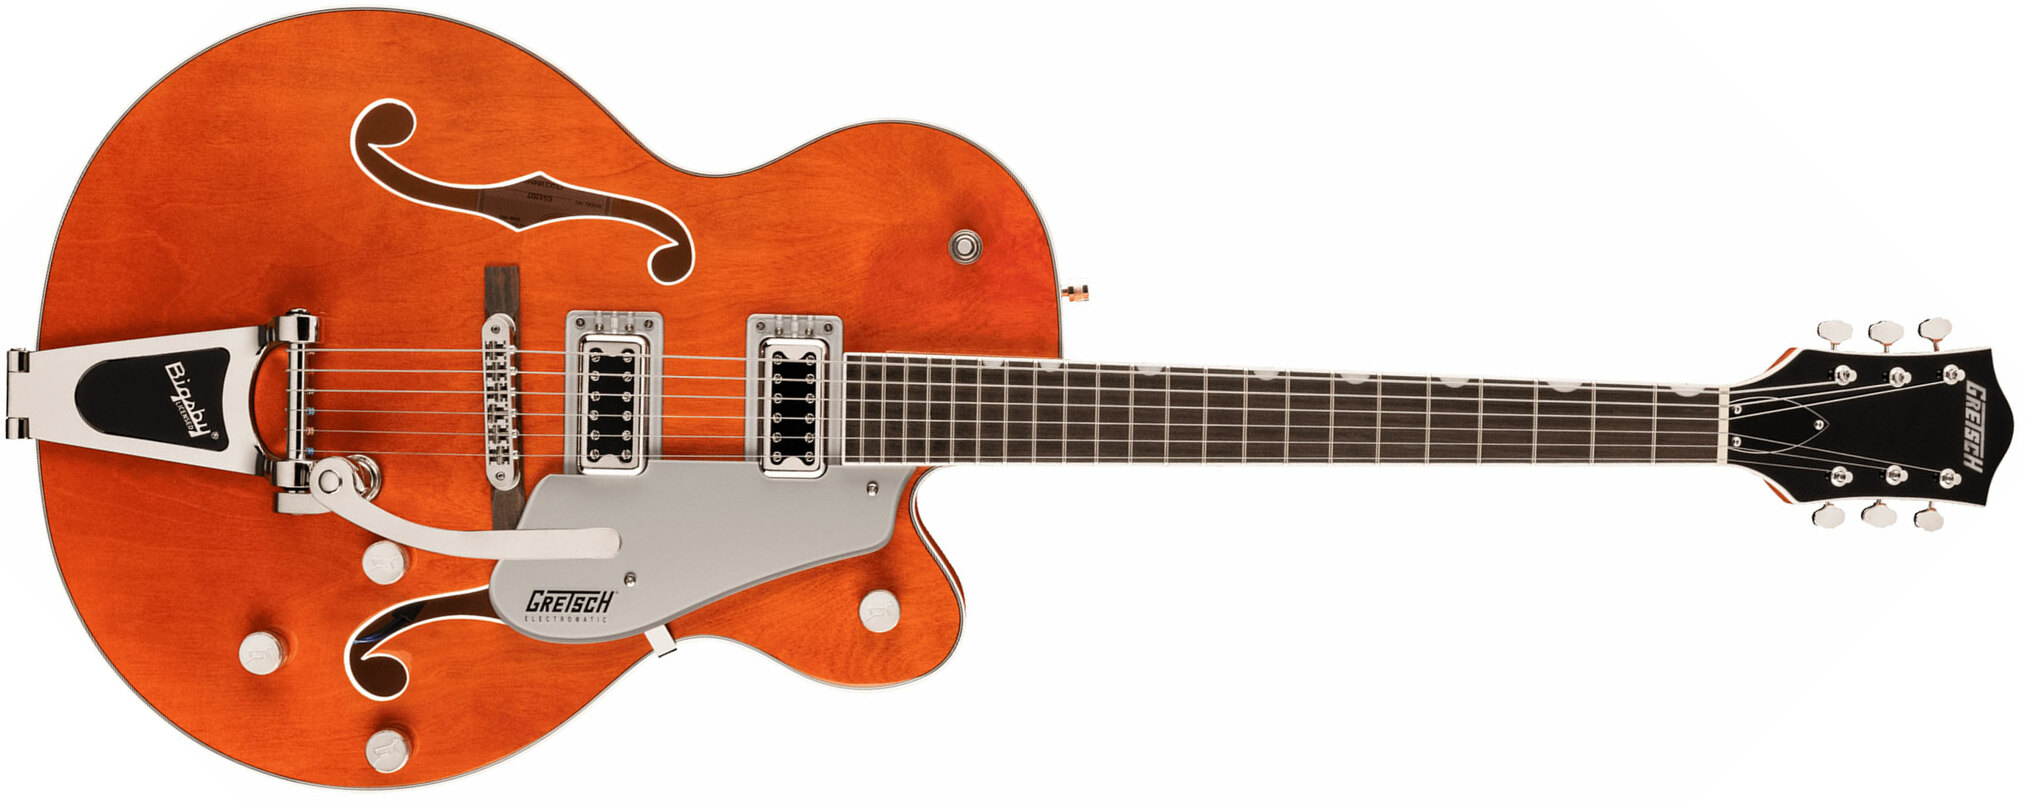 Gretsch G5420t Classic Electromatic Hollow Body Hh Trem Bigsby Lau - Orange Stain - Semi hollow elektriche gitaar - Main picture